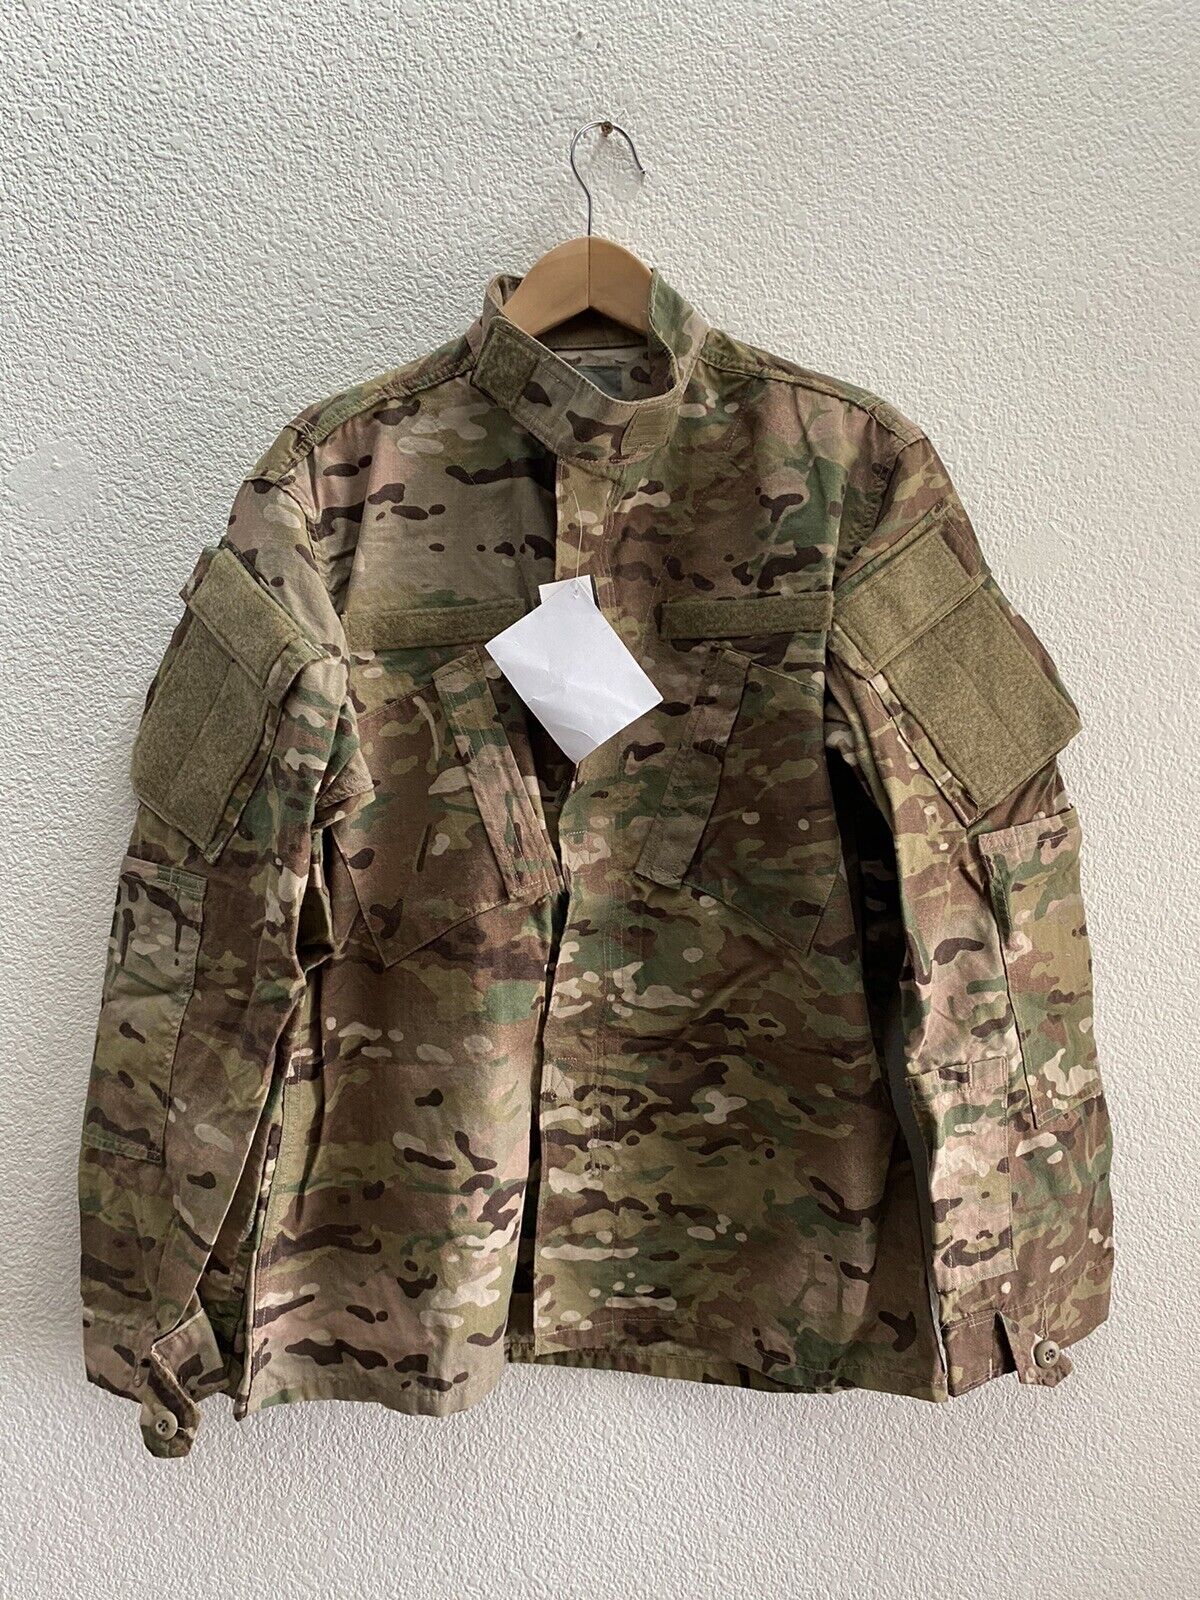 U.S. Army Military Apparel Army Combat Uniform Coat Jacket Medium Regular NWT